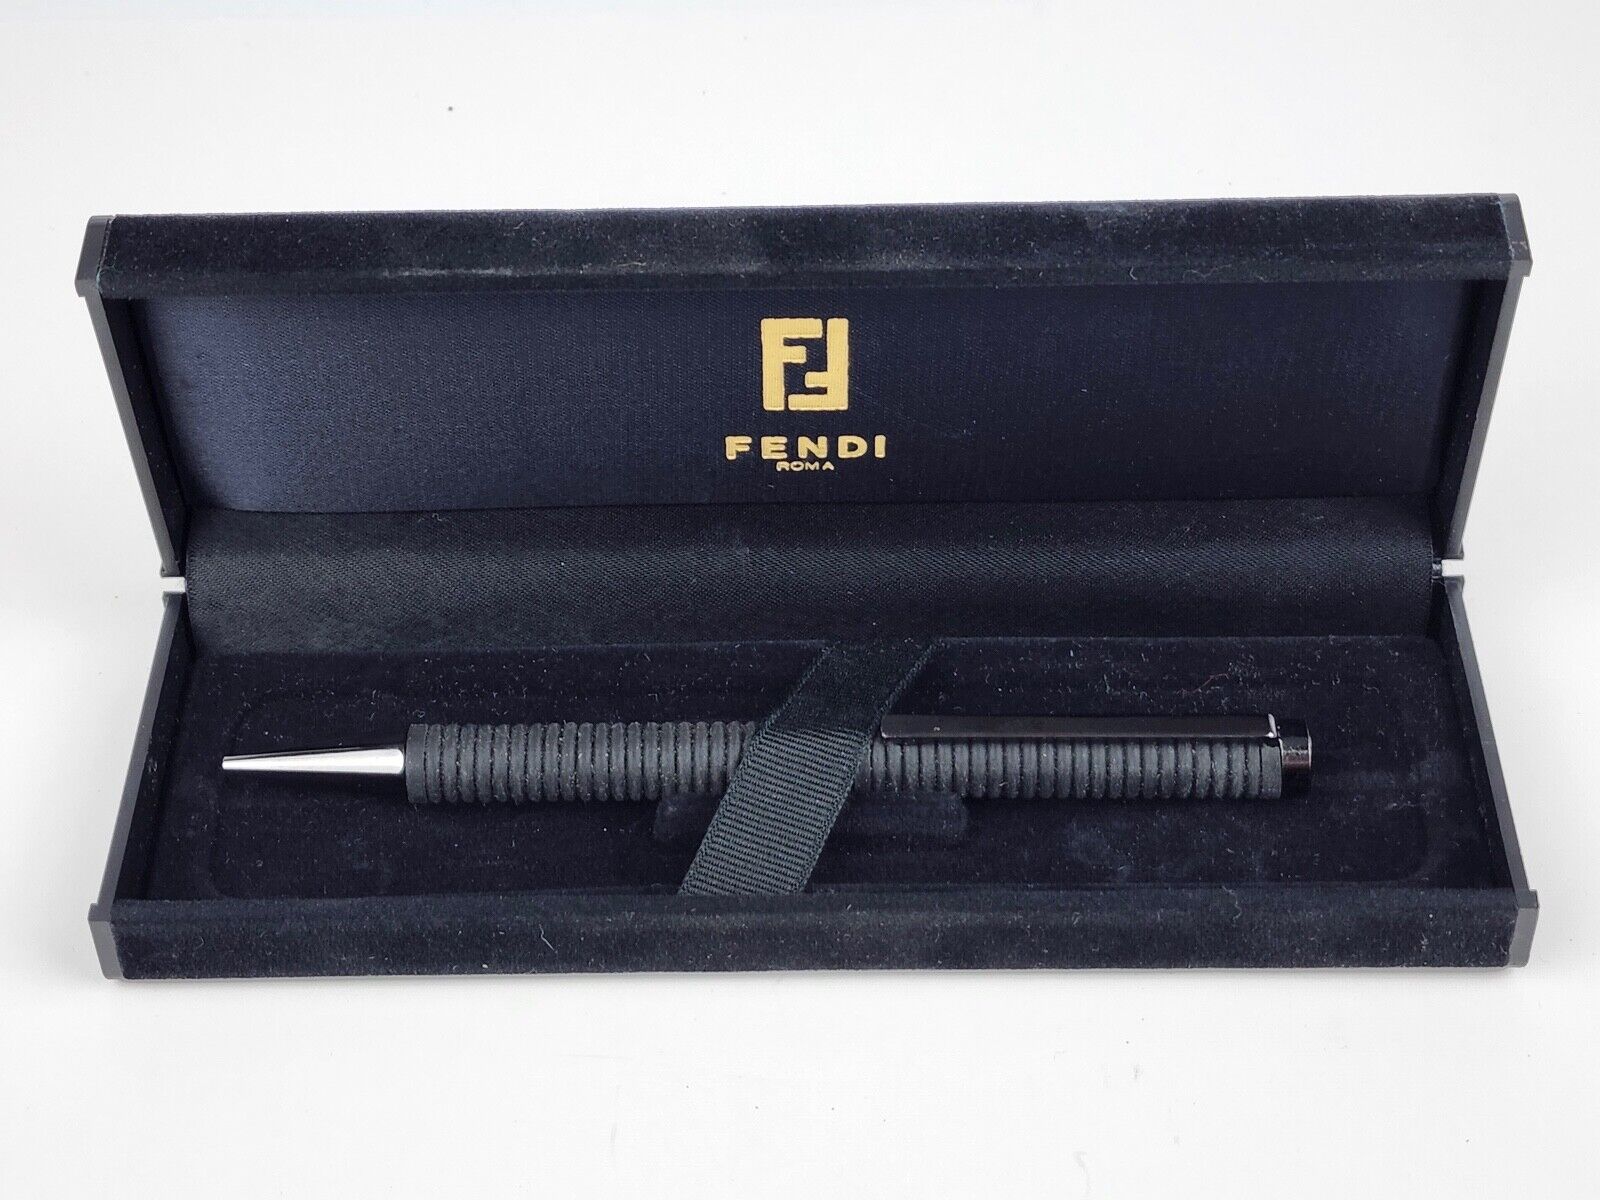 Authentic Fendi Roma Ink Pen ribbed rubber gun metal gray w/ box Writes Smooth